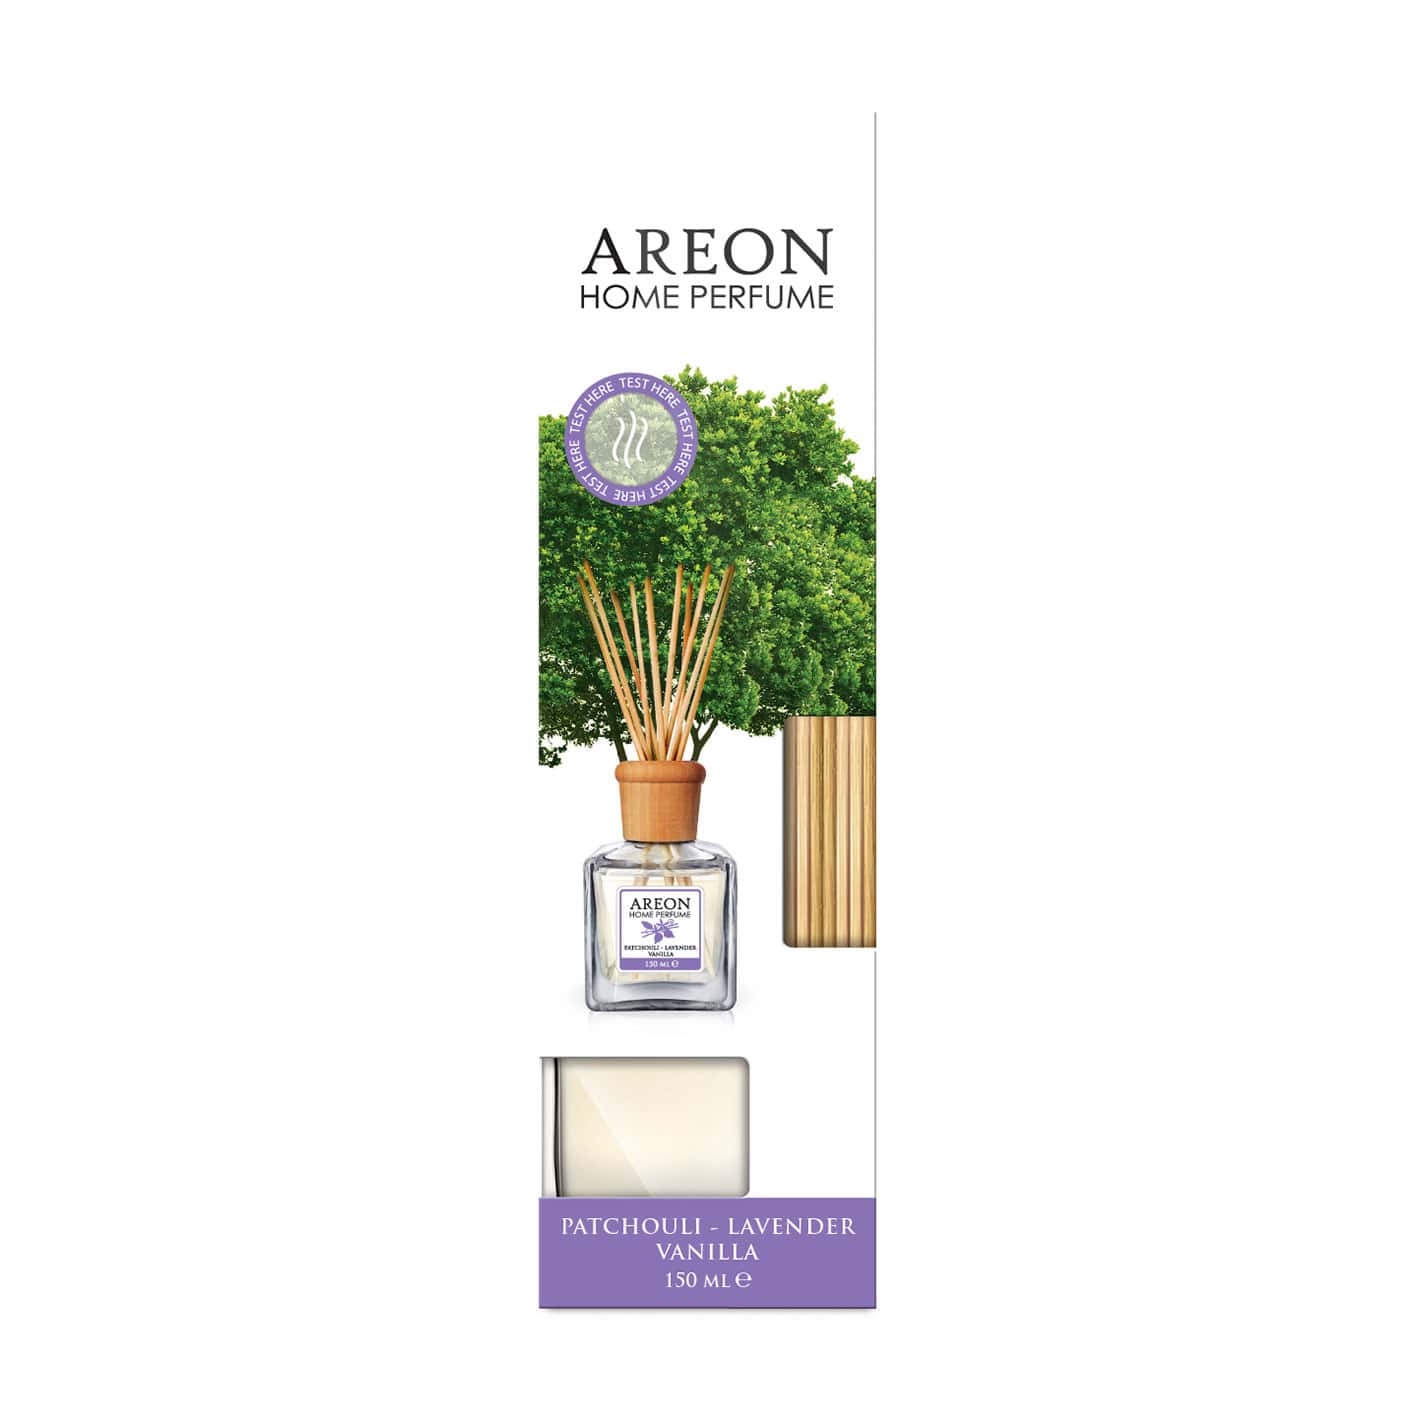 Areon Perfume Sticks 150 ml - Lavender Vanilla Scent